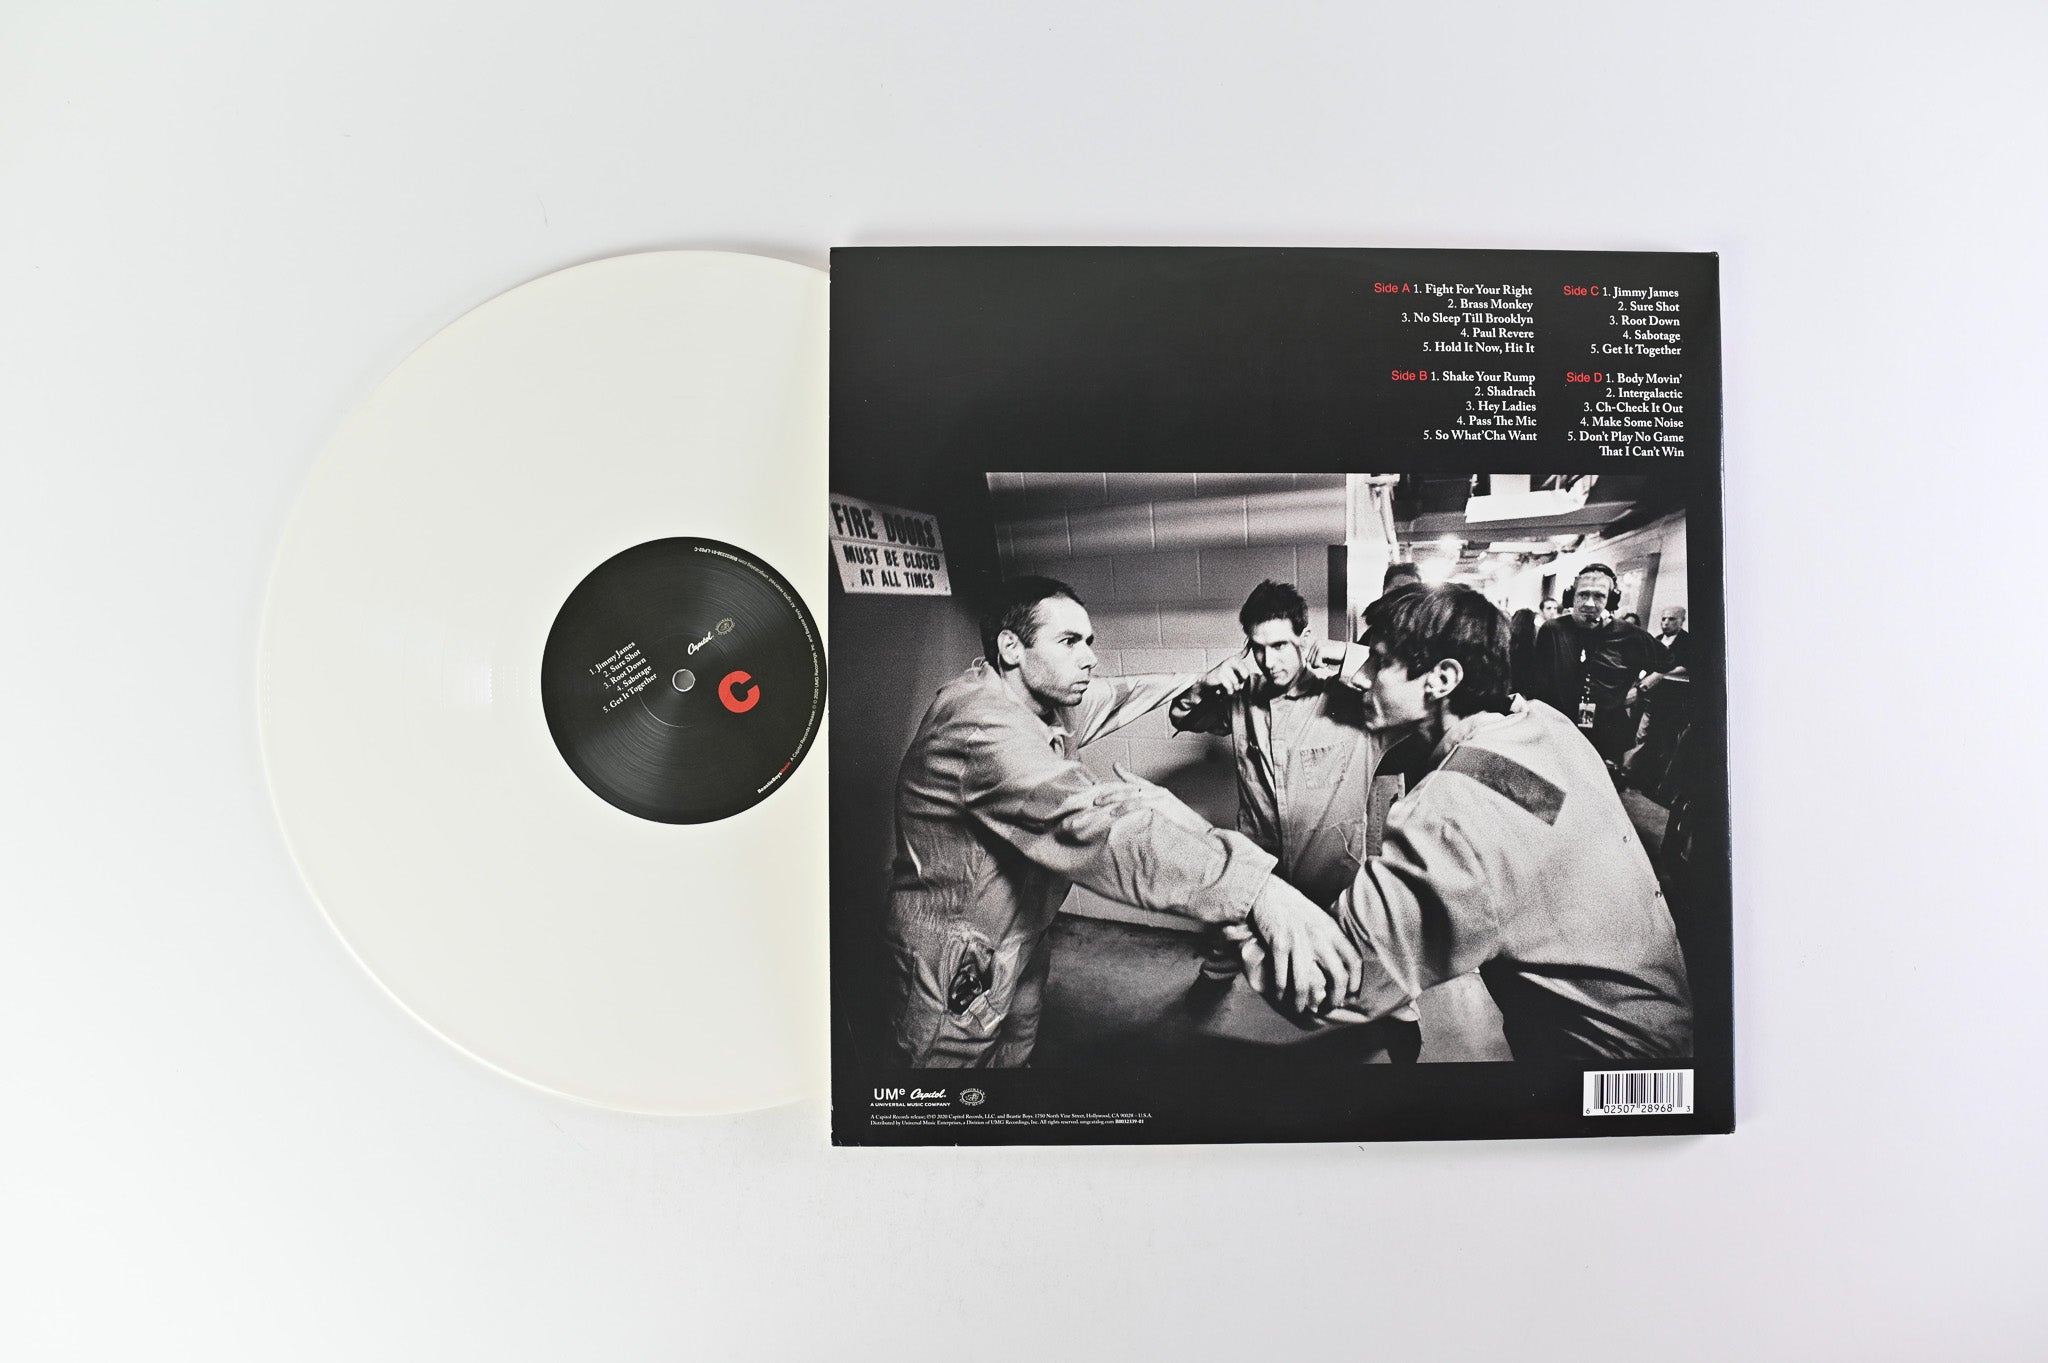 Beastie Boys - Beastie Boys Music on Capitol Ltd Red & White Vinyl